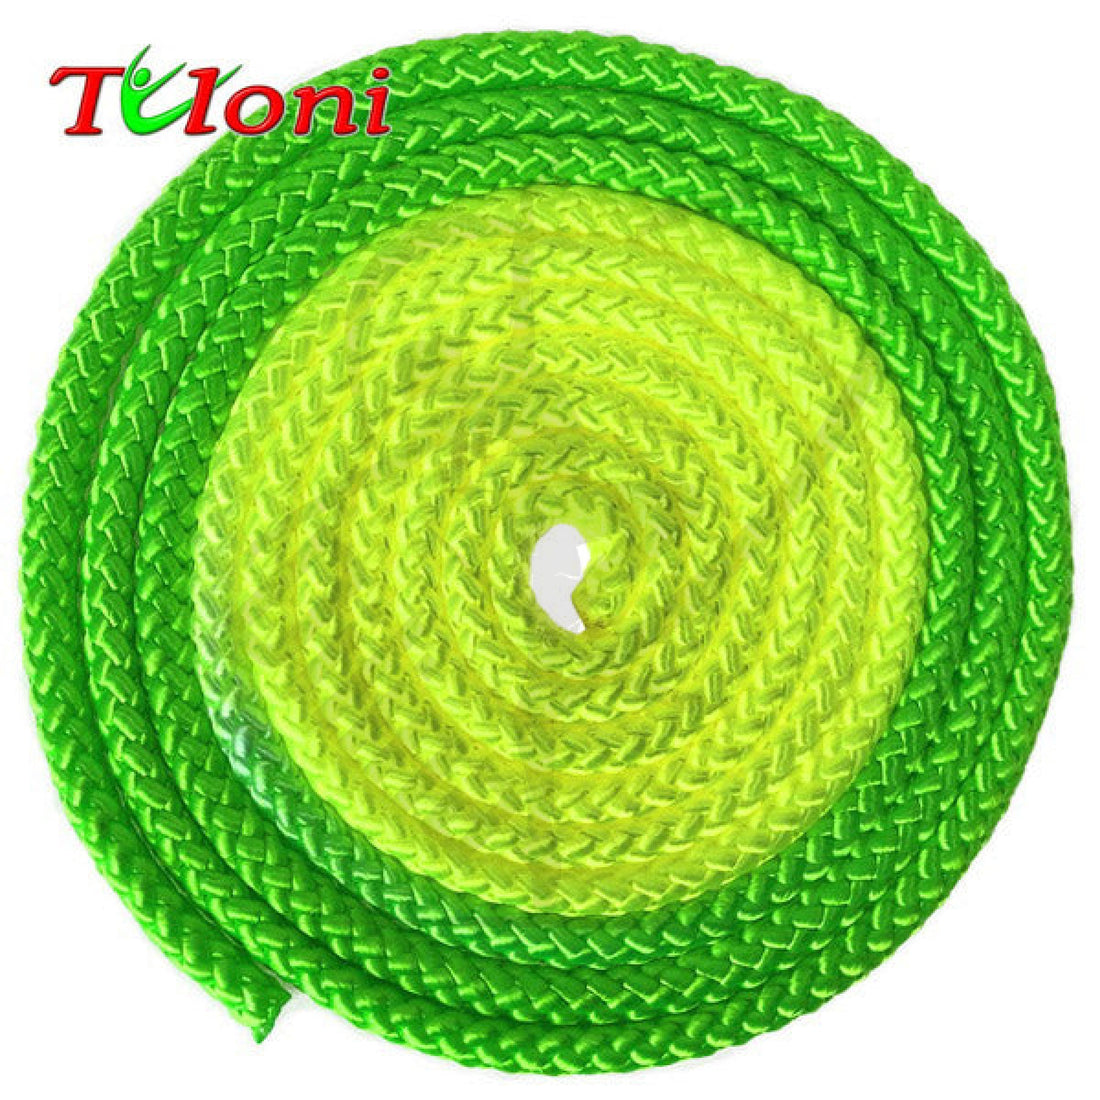 Tuloni Multicolour Rope 3M Neon Green X Yellow Ropes